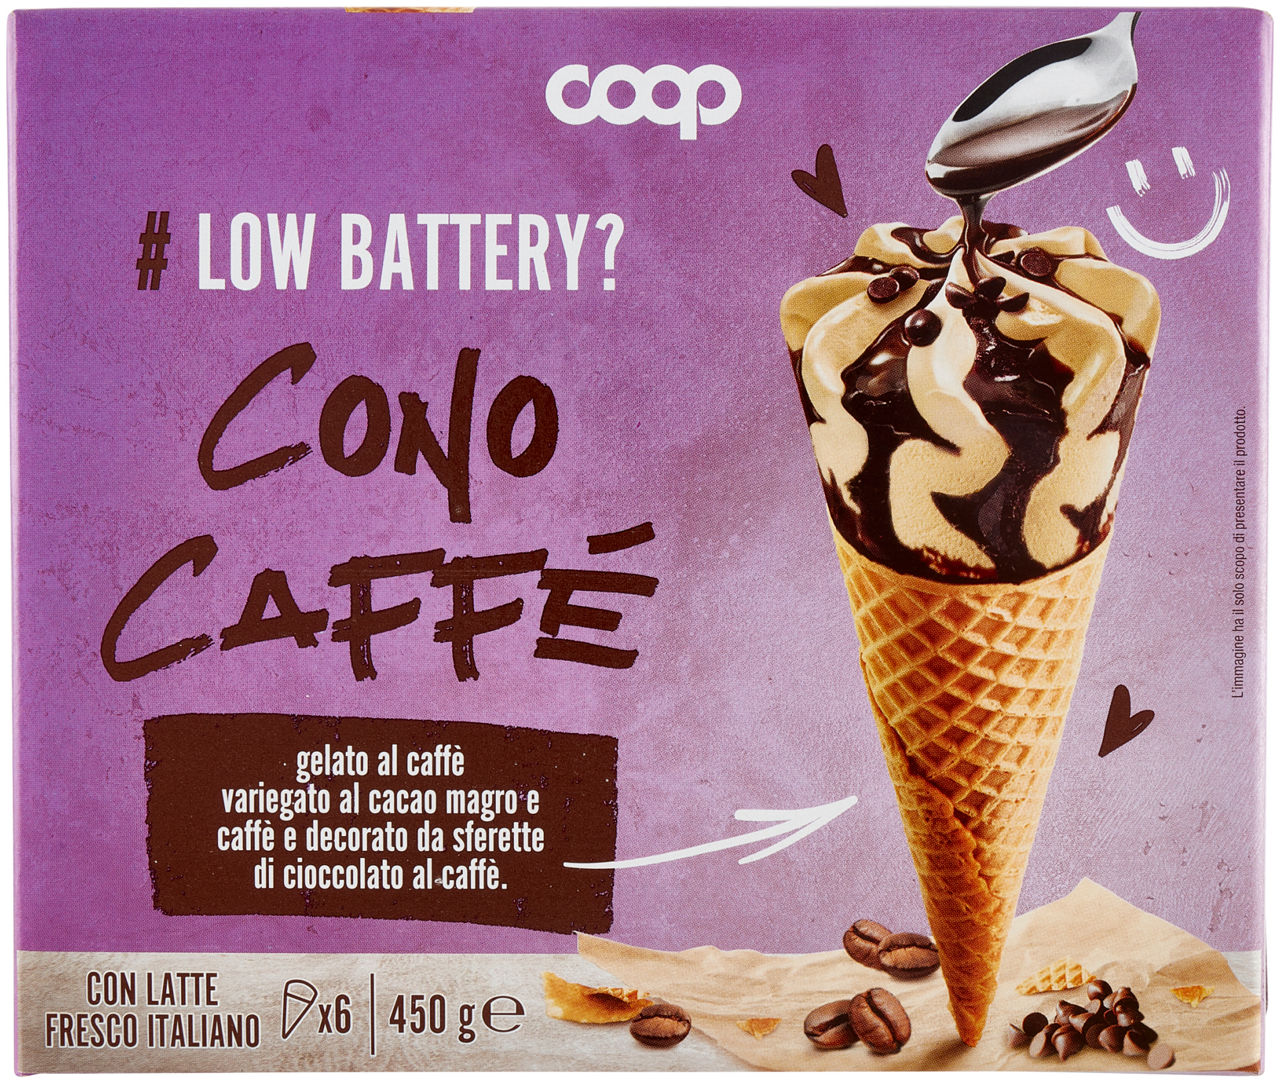 Cono caffe' coop g75x6pz g 450